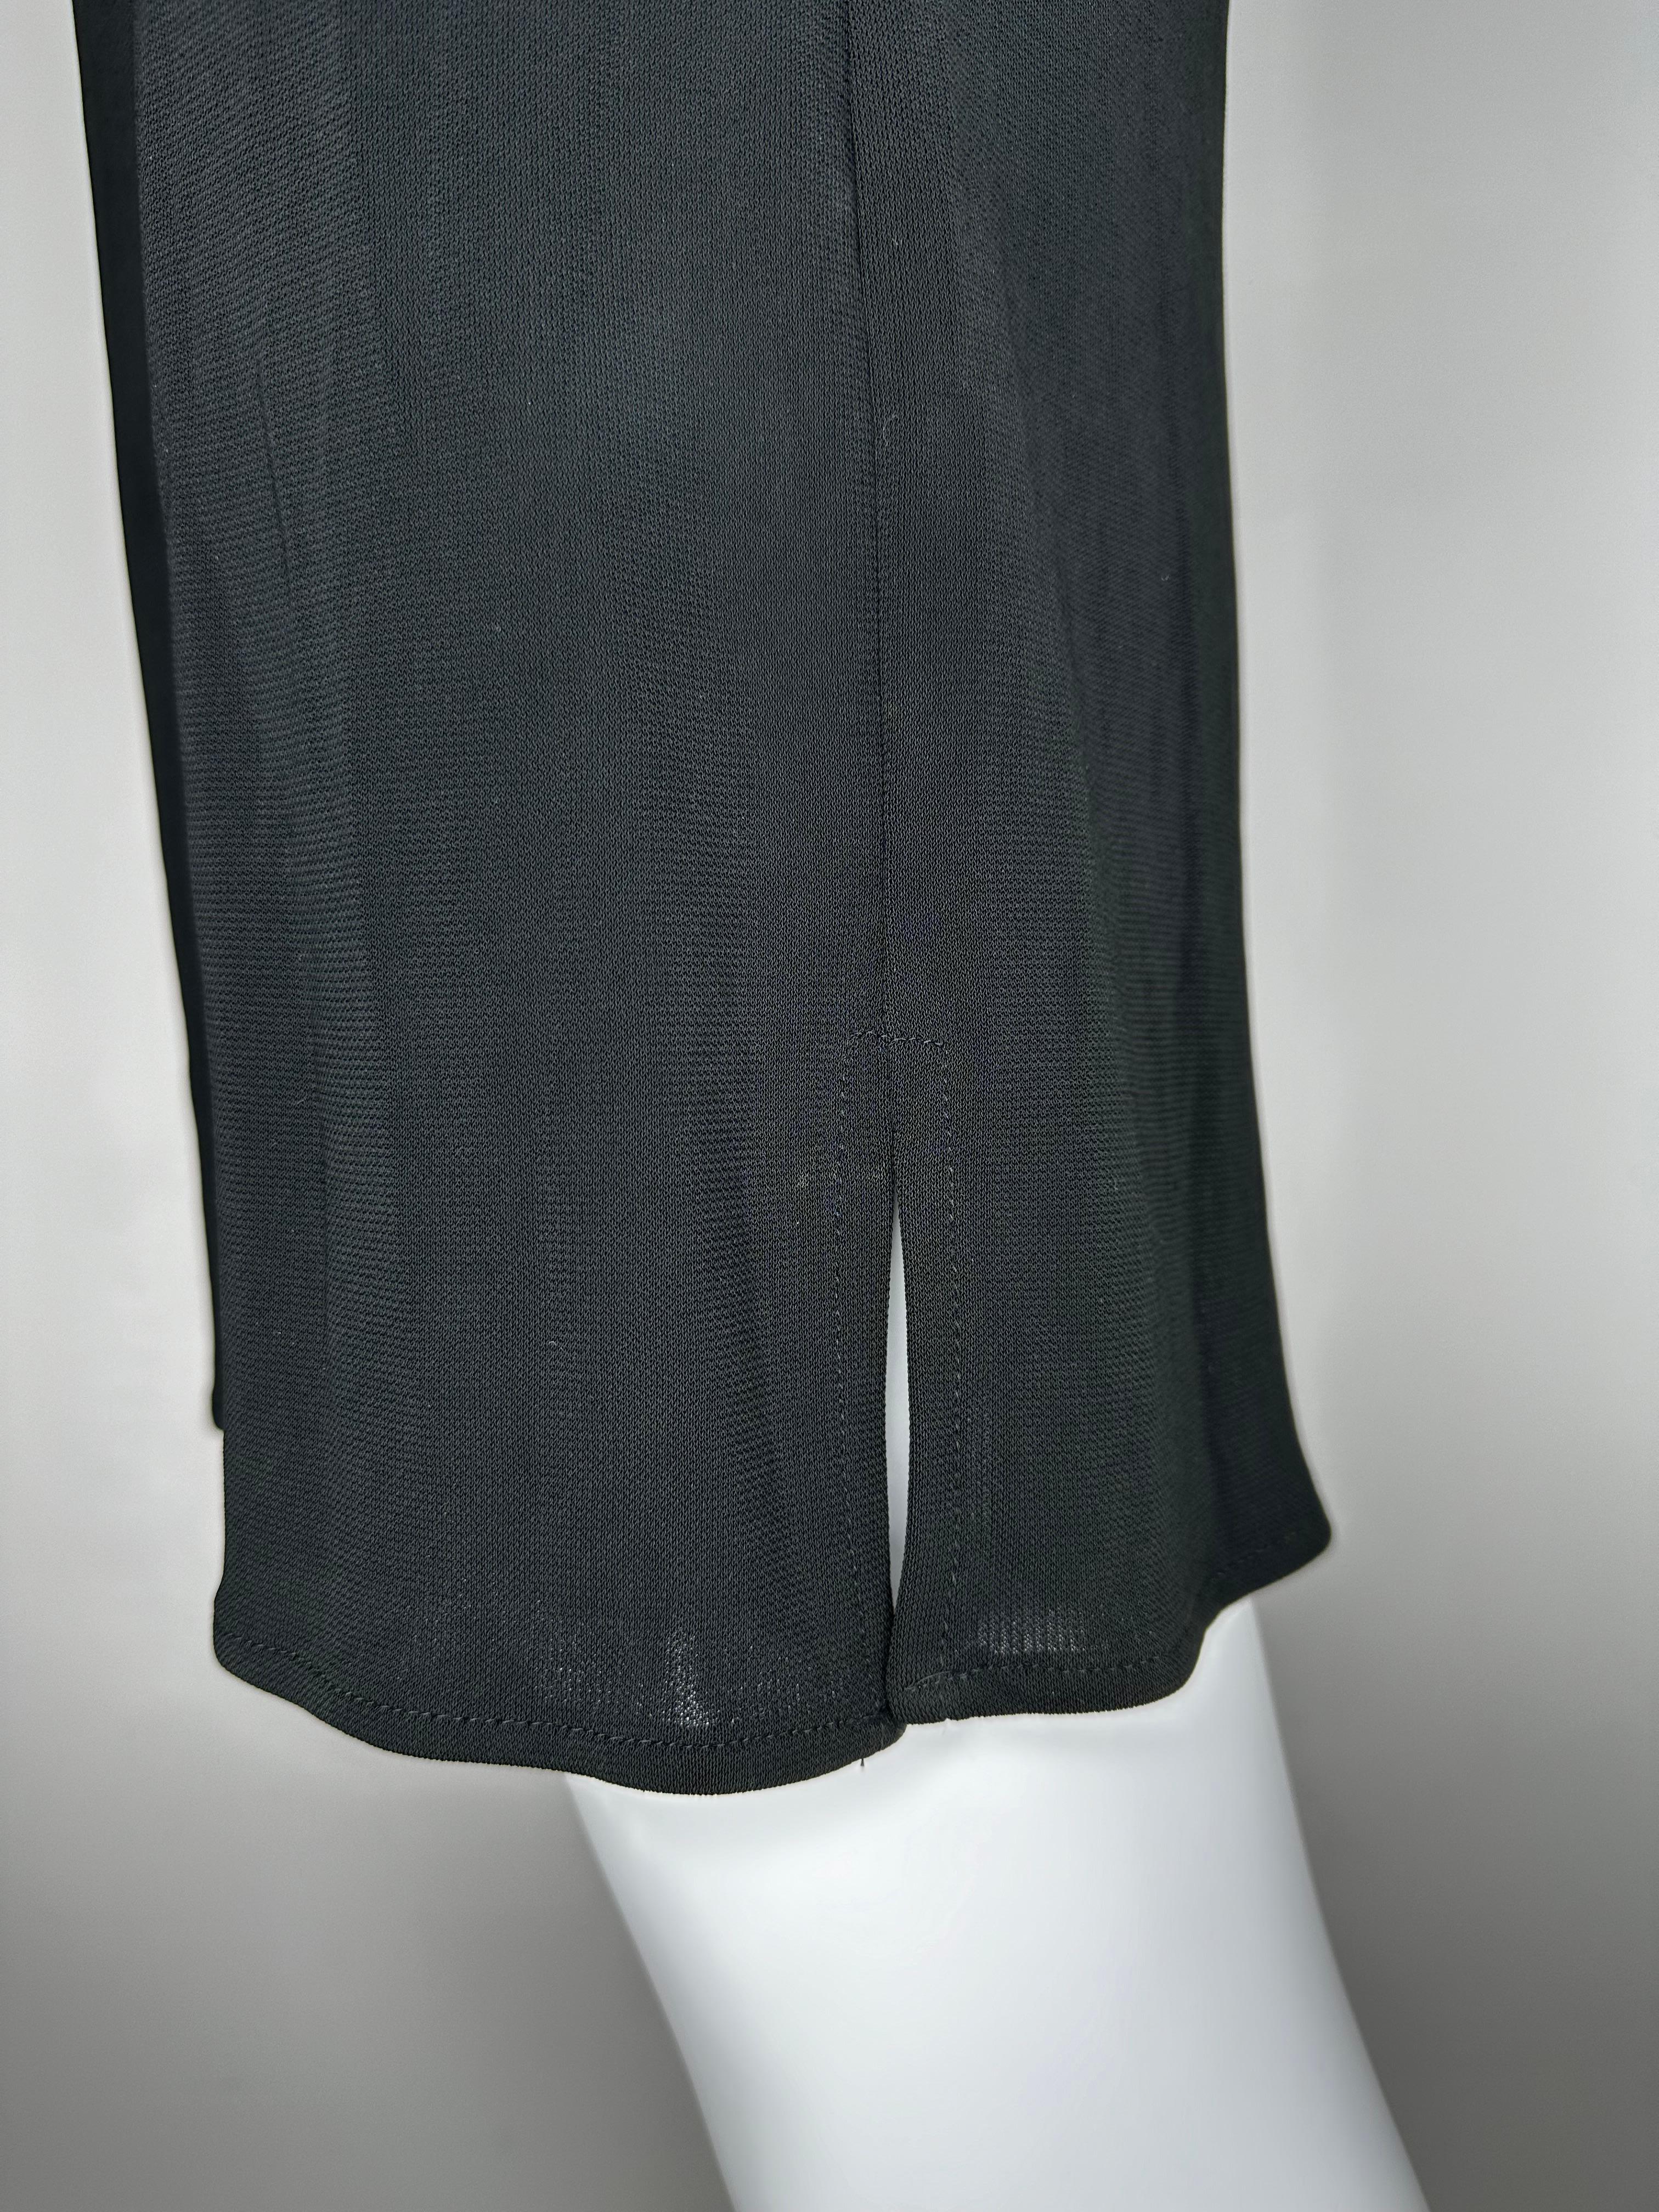 Dolce Gabbana 1996 runway mini slit dress For Sale 1